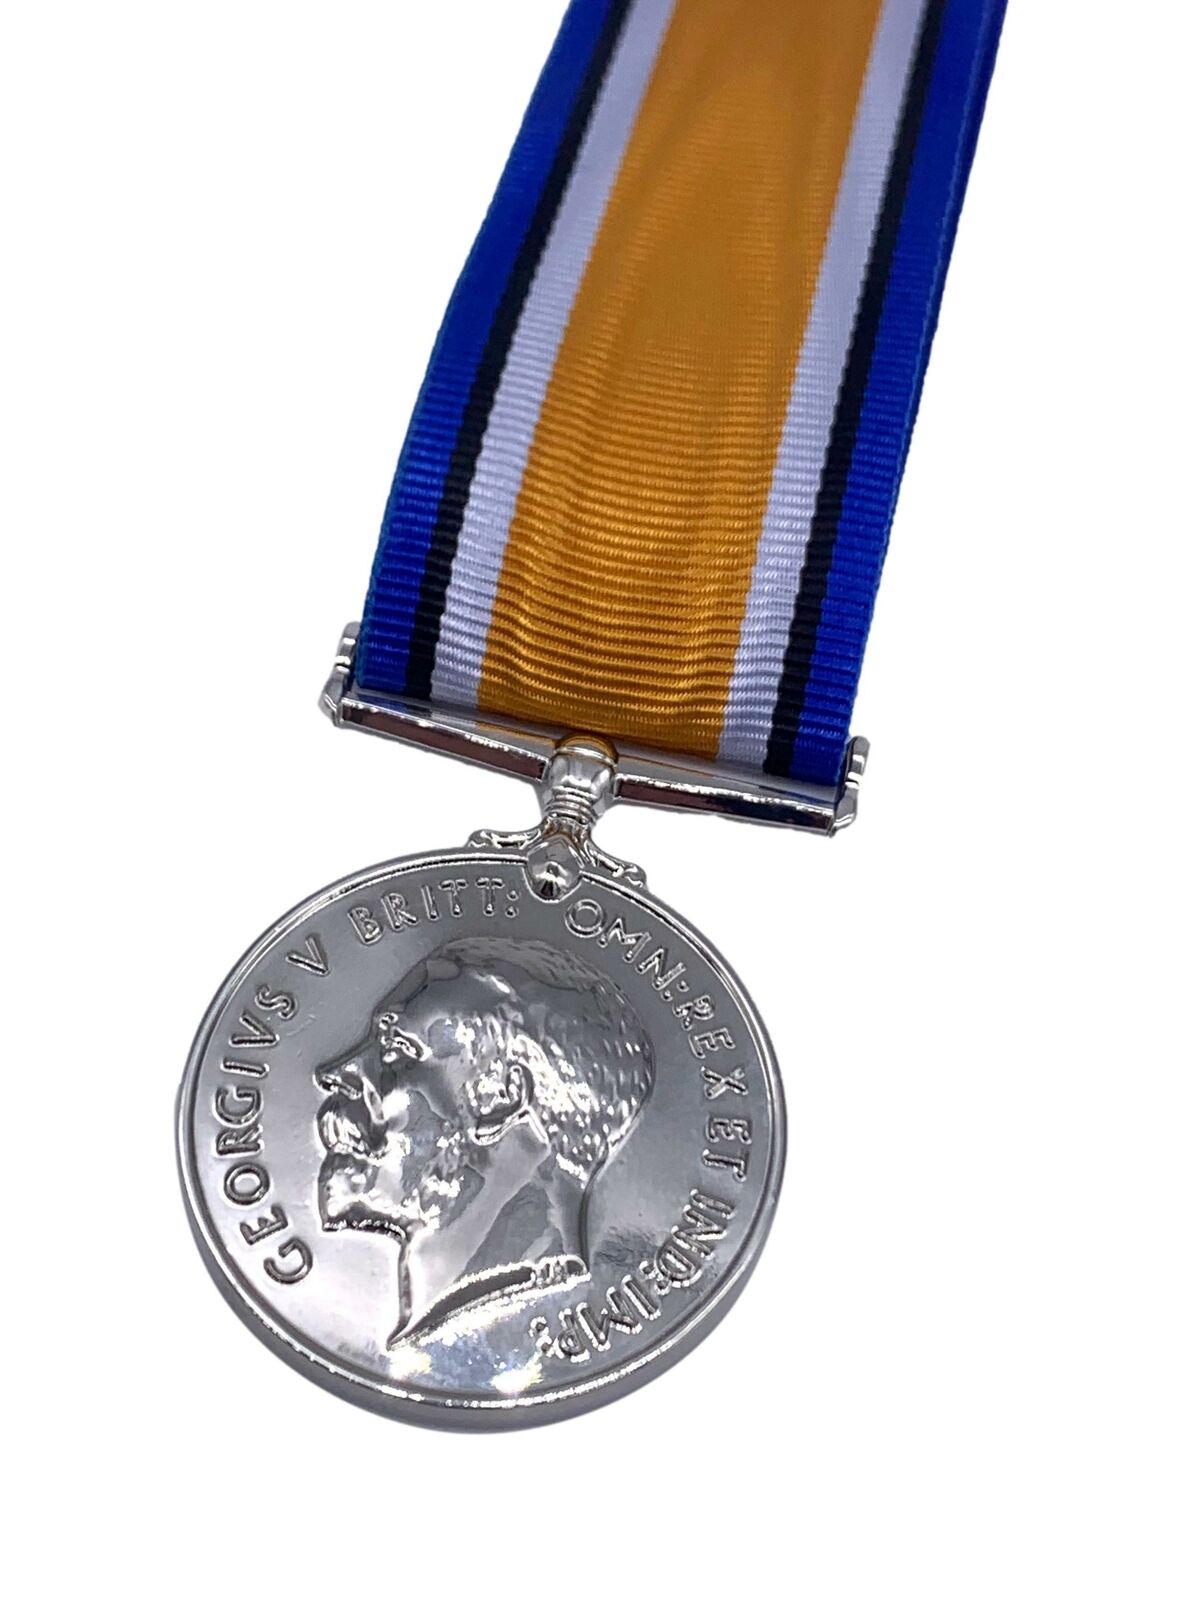 Replica WW1 British War Medal, Brand New Copy/Reproduction